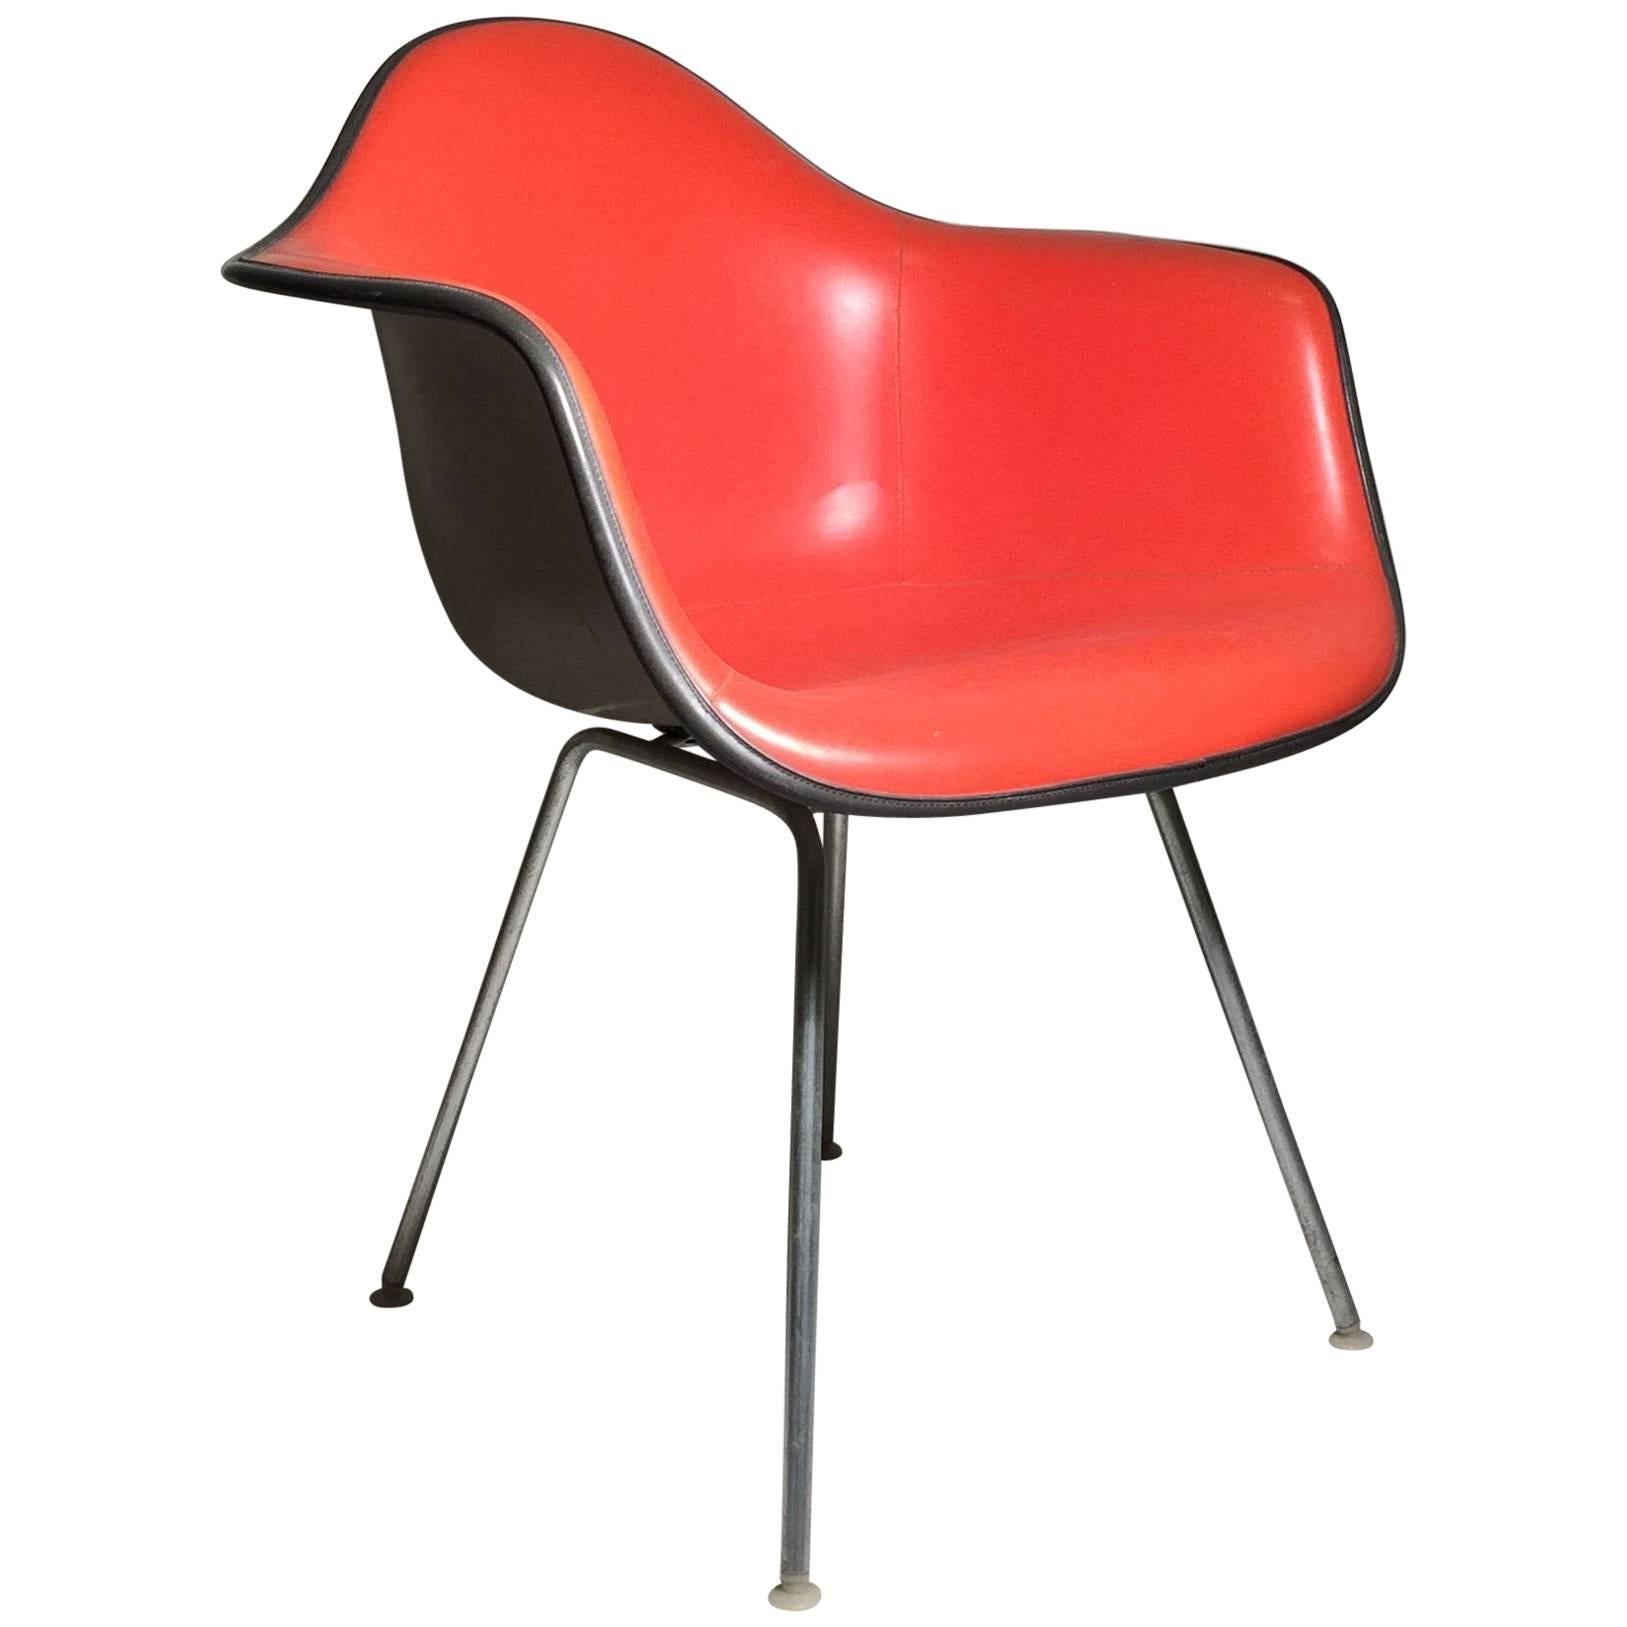 4 Herman Miller Eames Fiberglass Chair Glides Feet Original Used Free Shipping 